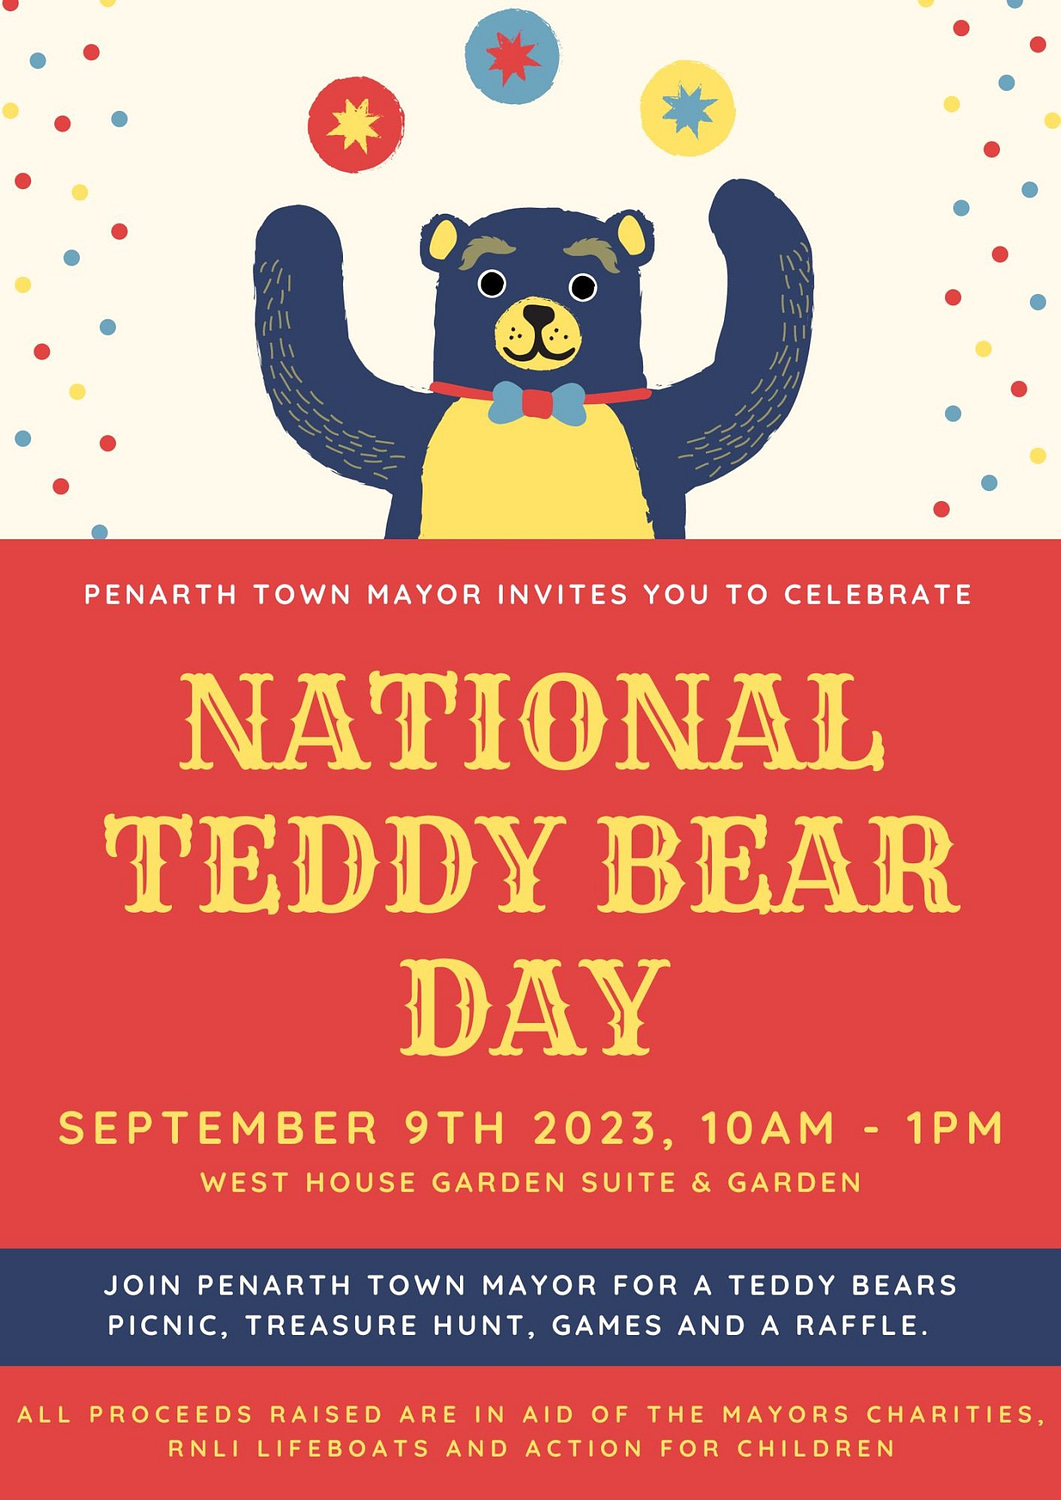 teddy bear day 09 09 23 (1)